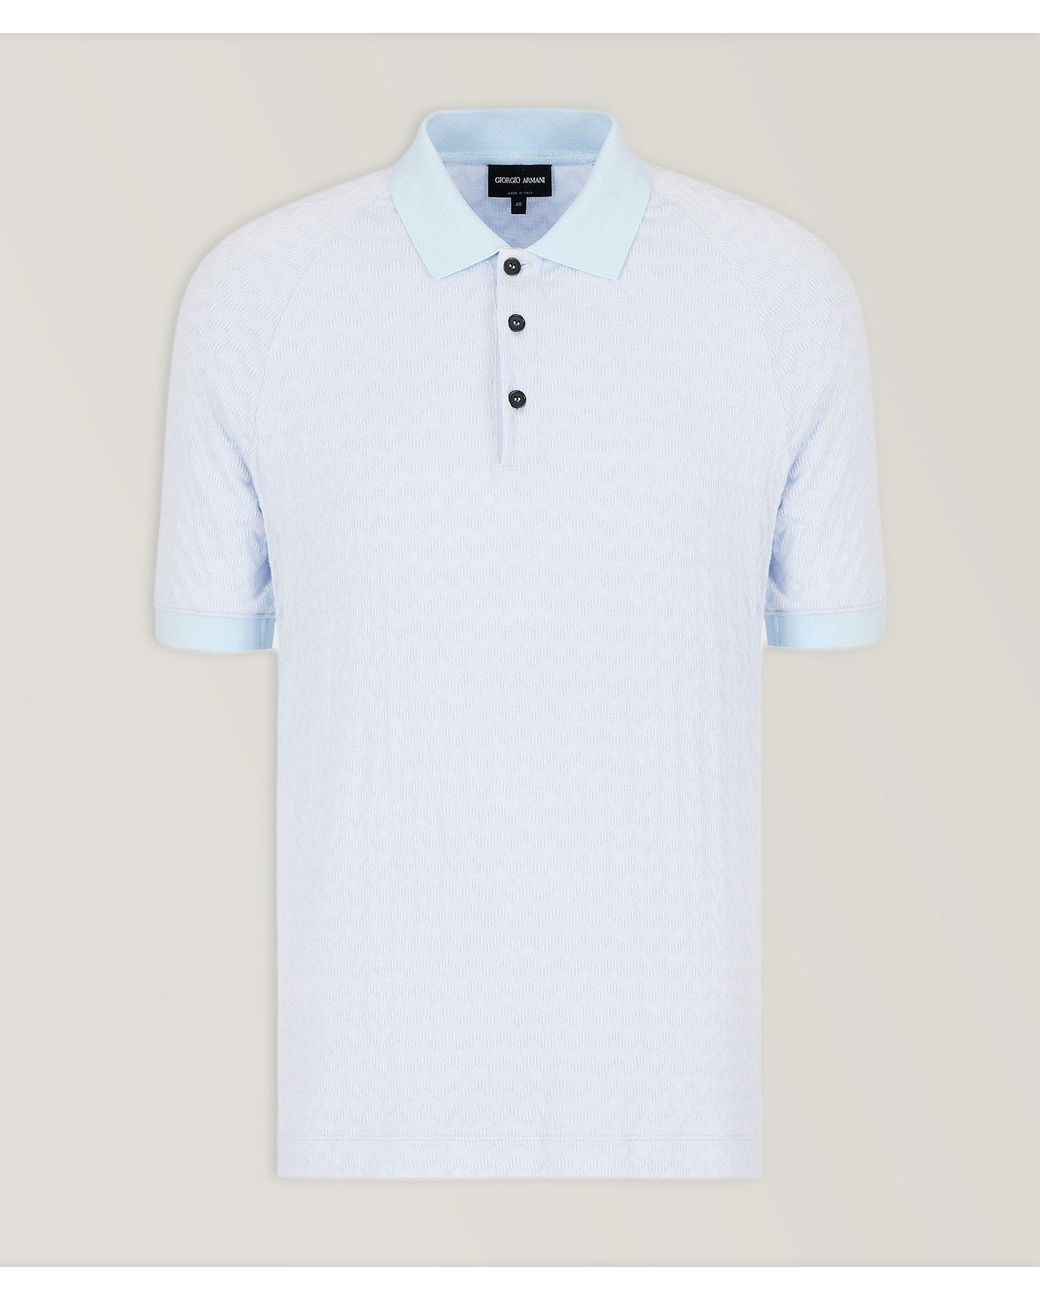 Giorgio Armani zig-zag Jacquard Polo Shirt - Farfetch